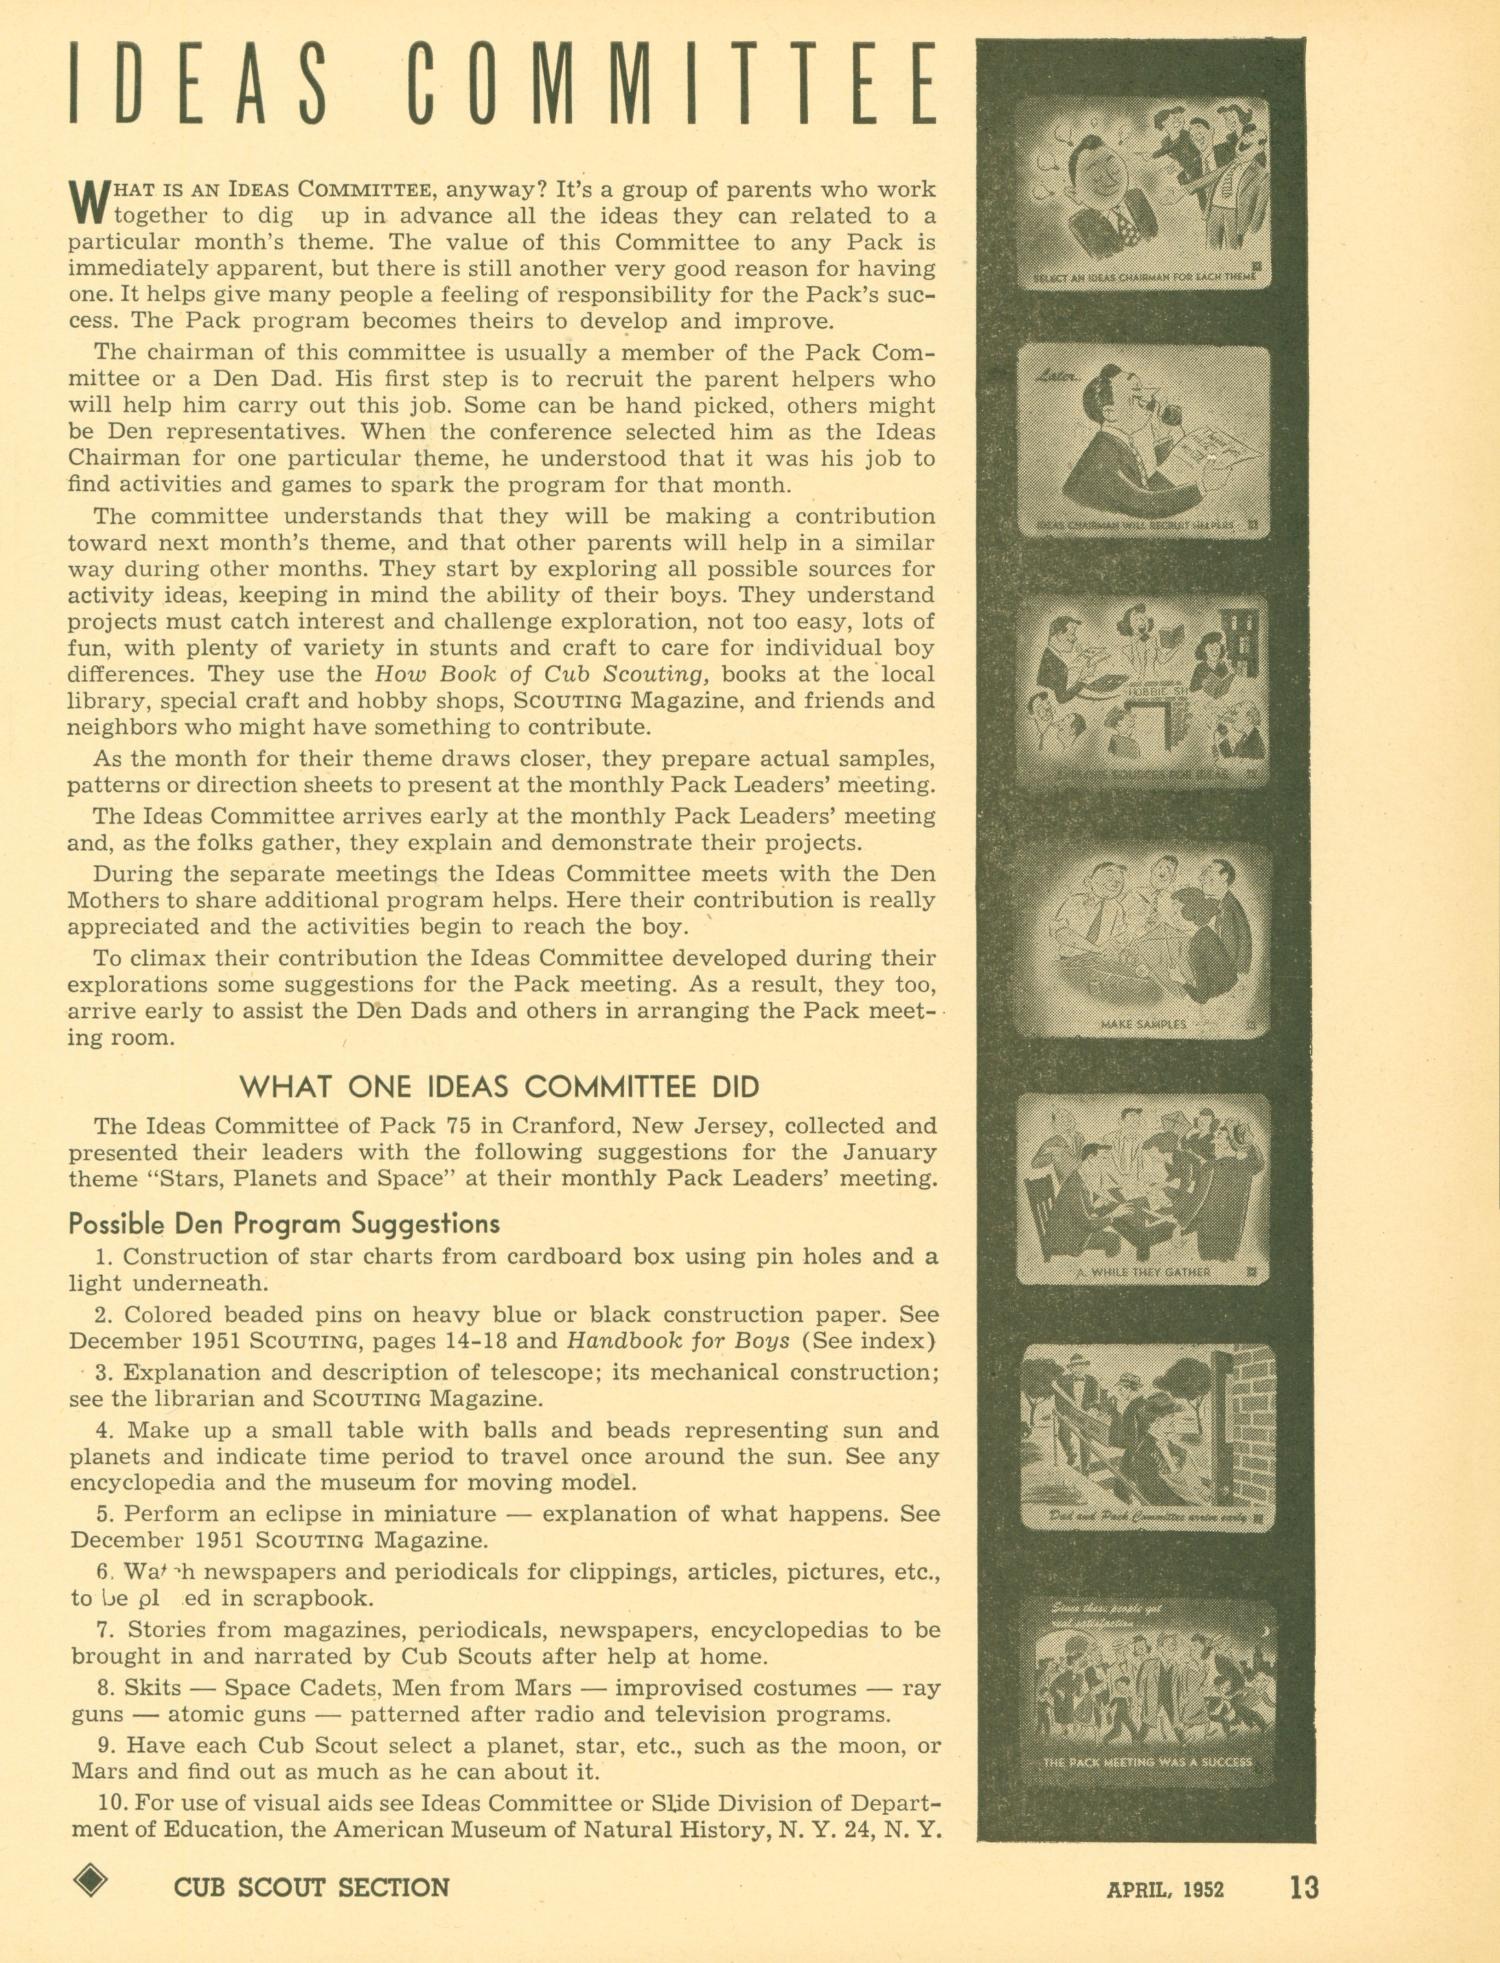 Scouting, Volume 40, Number 4, April 1952
                                                
                                                    13
                                                